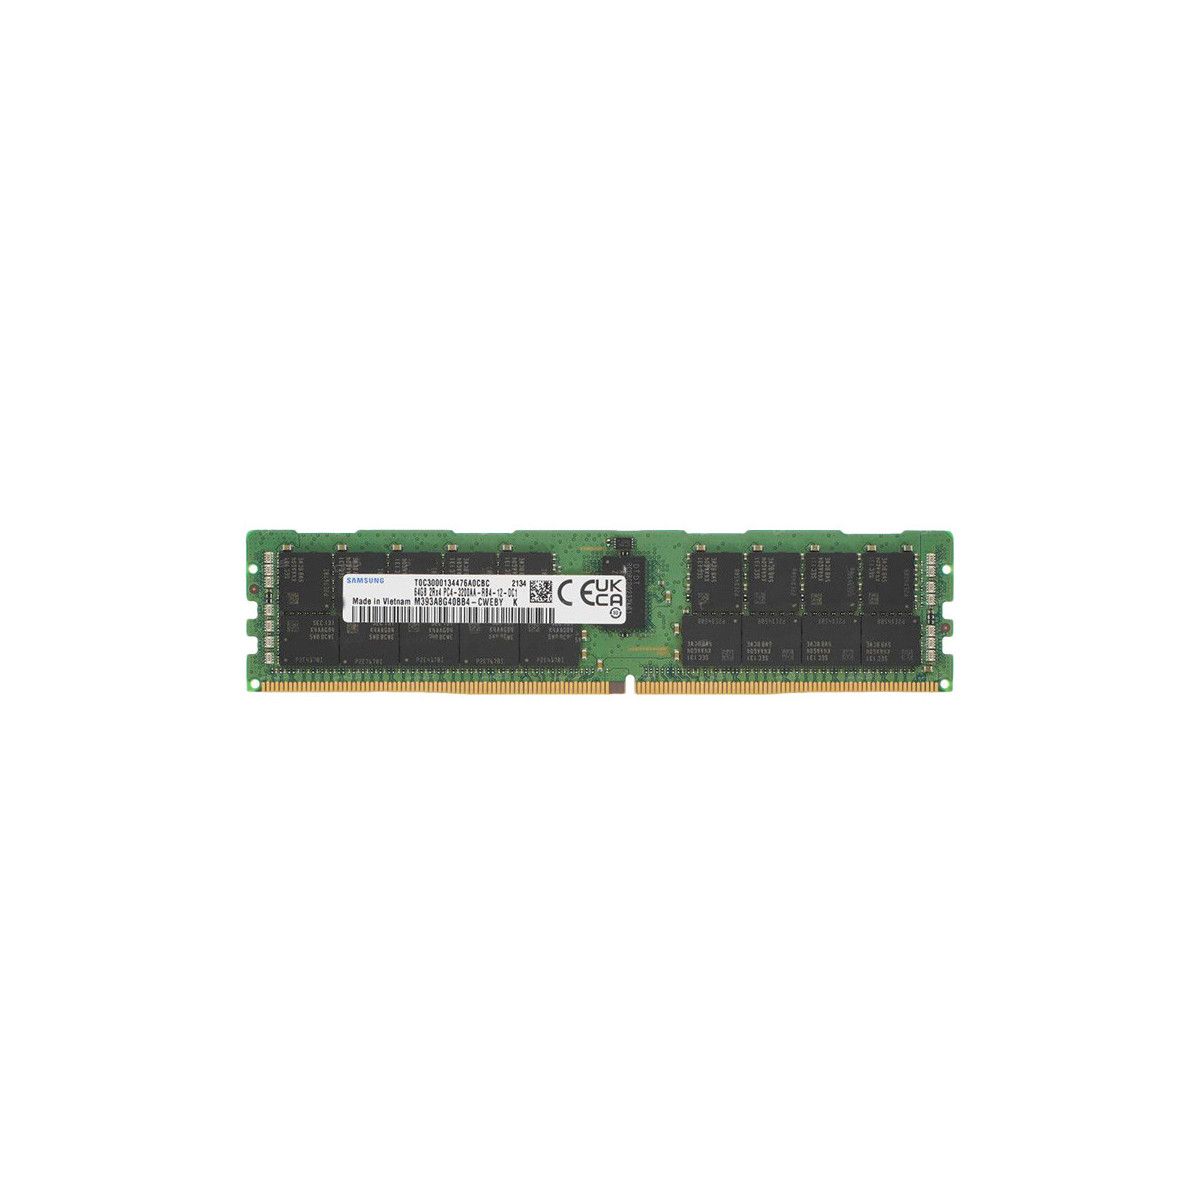 AB214253-MS - Memstar 1x 64GB DDR4-3200 RDIMM PC4-25600R - Mem-Star OEM compatibile Memoria 1 - Memstar 